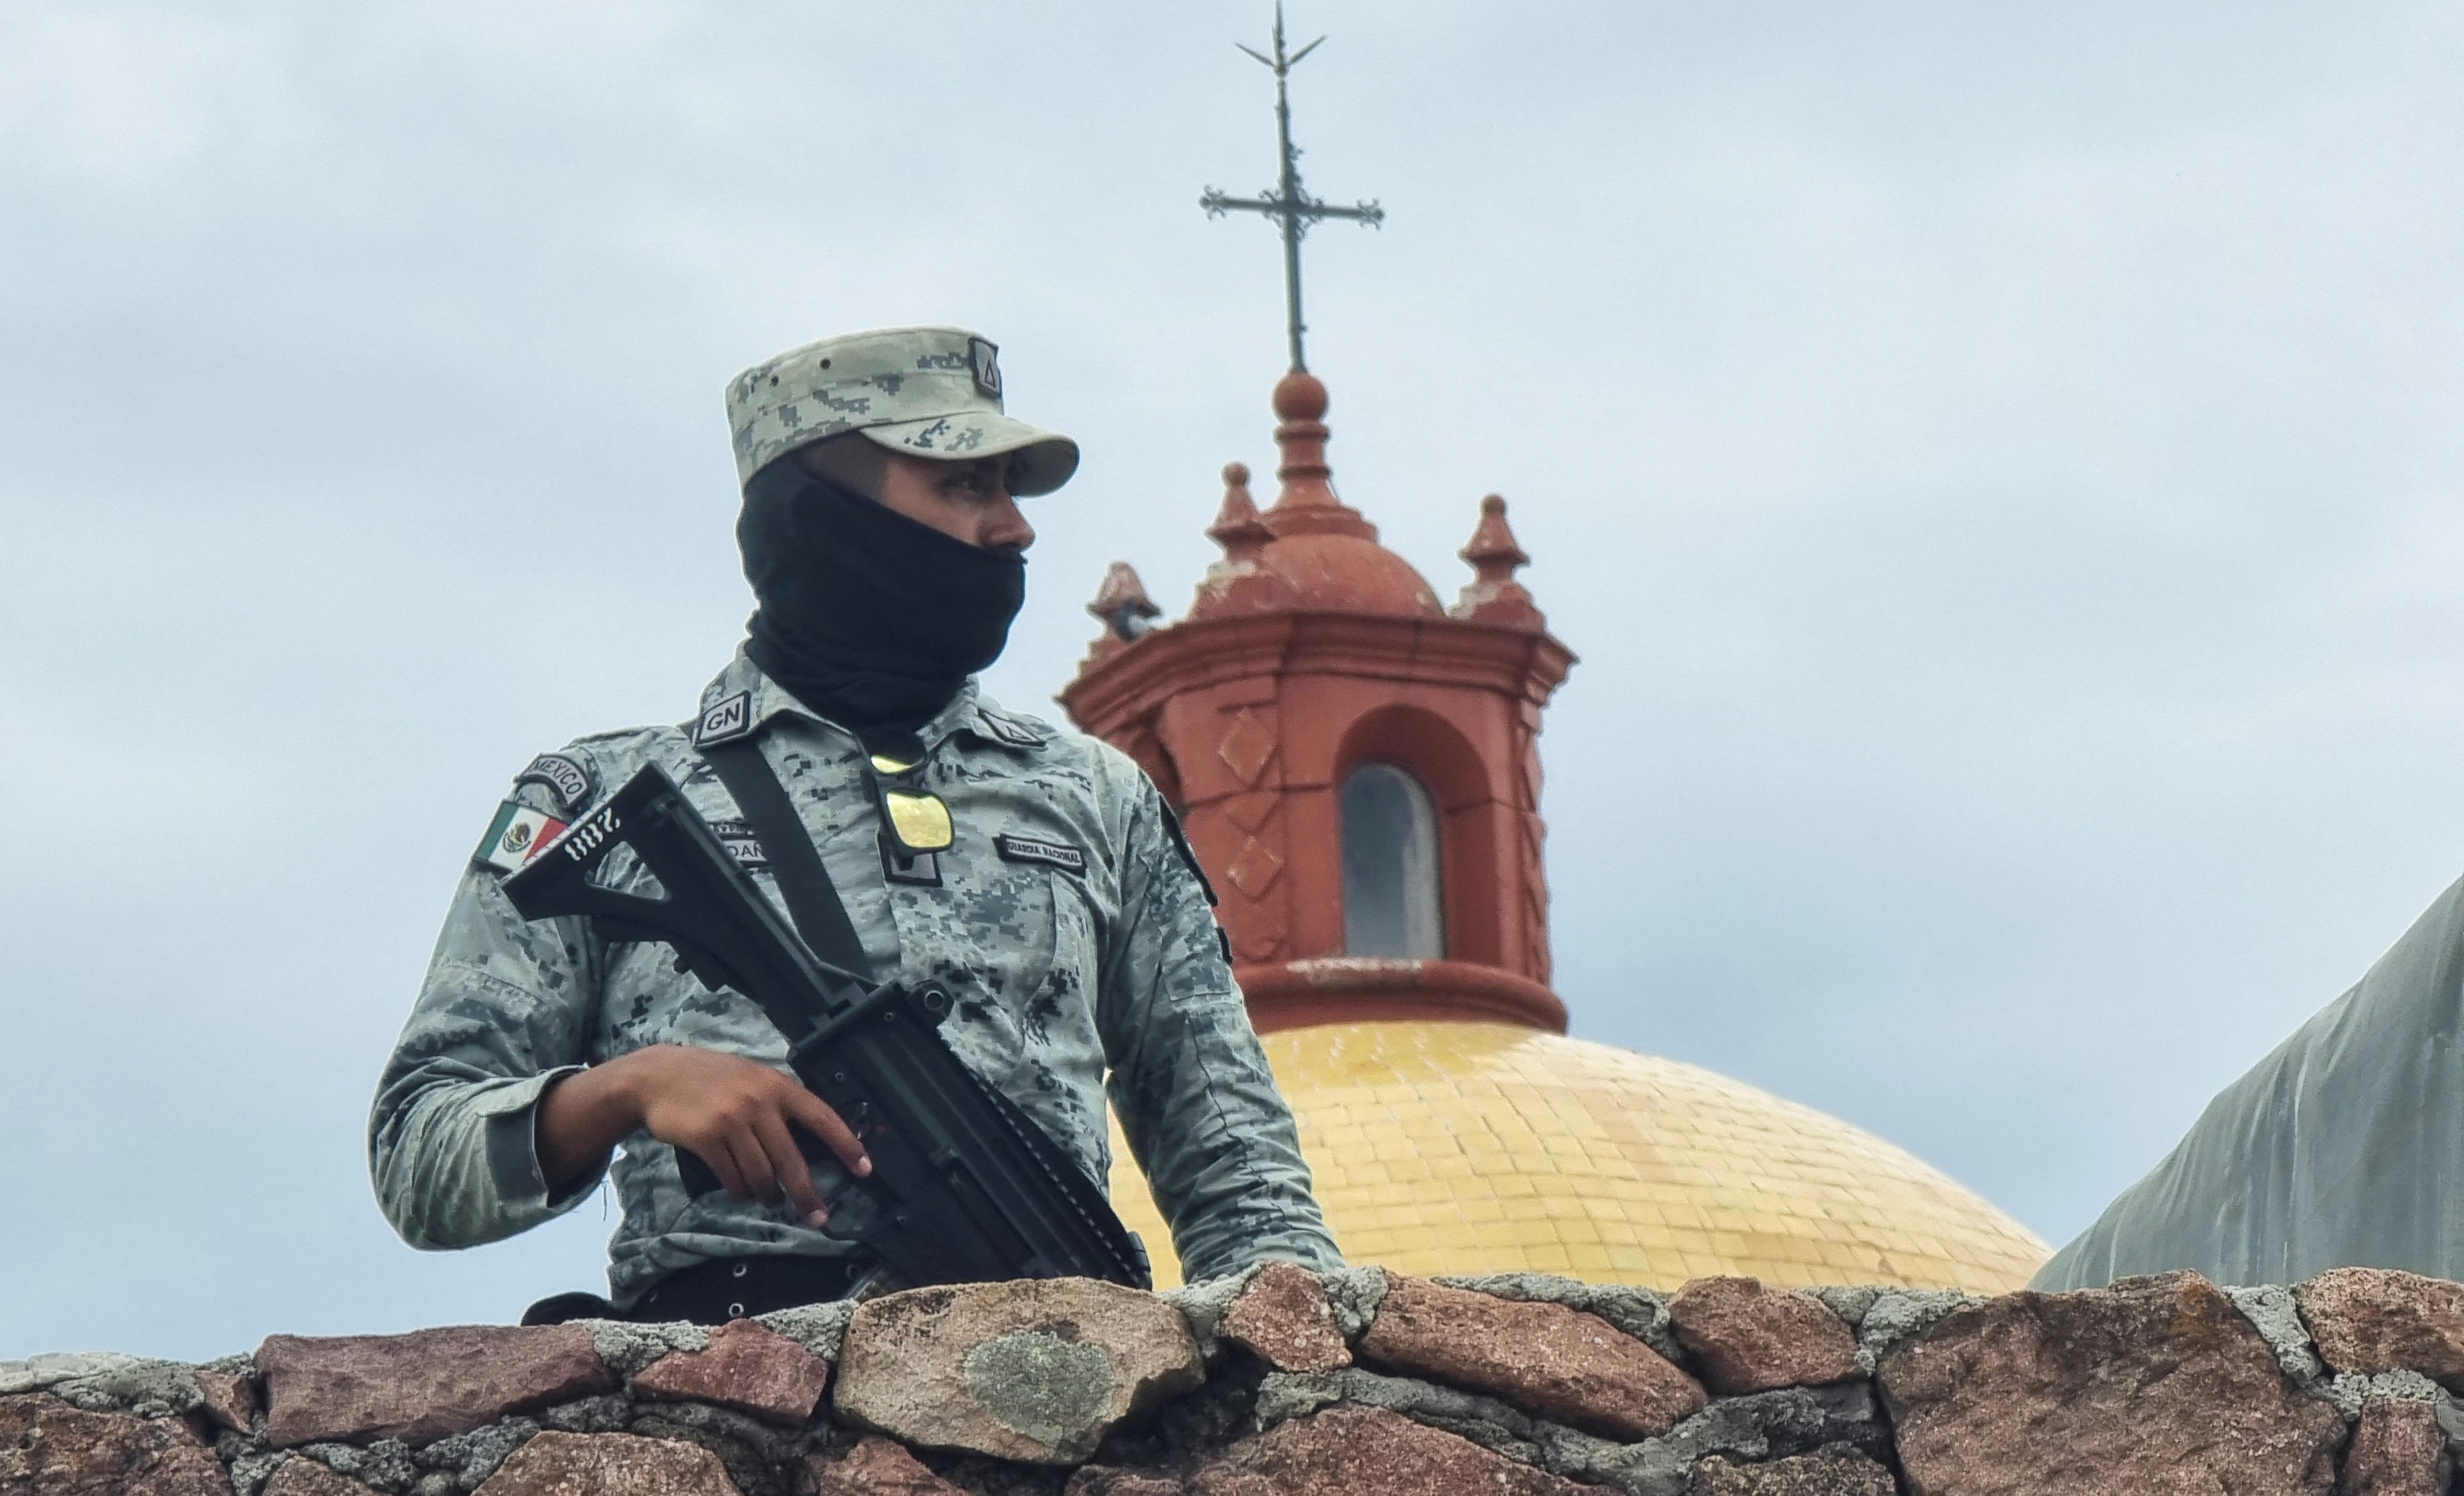 Autoridades buscan al responsable del asesinato de dos sacerdotes jesuitas en Chihuahua

Foto: REUTERS/Stringer